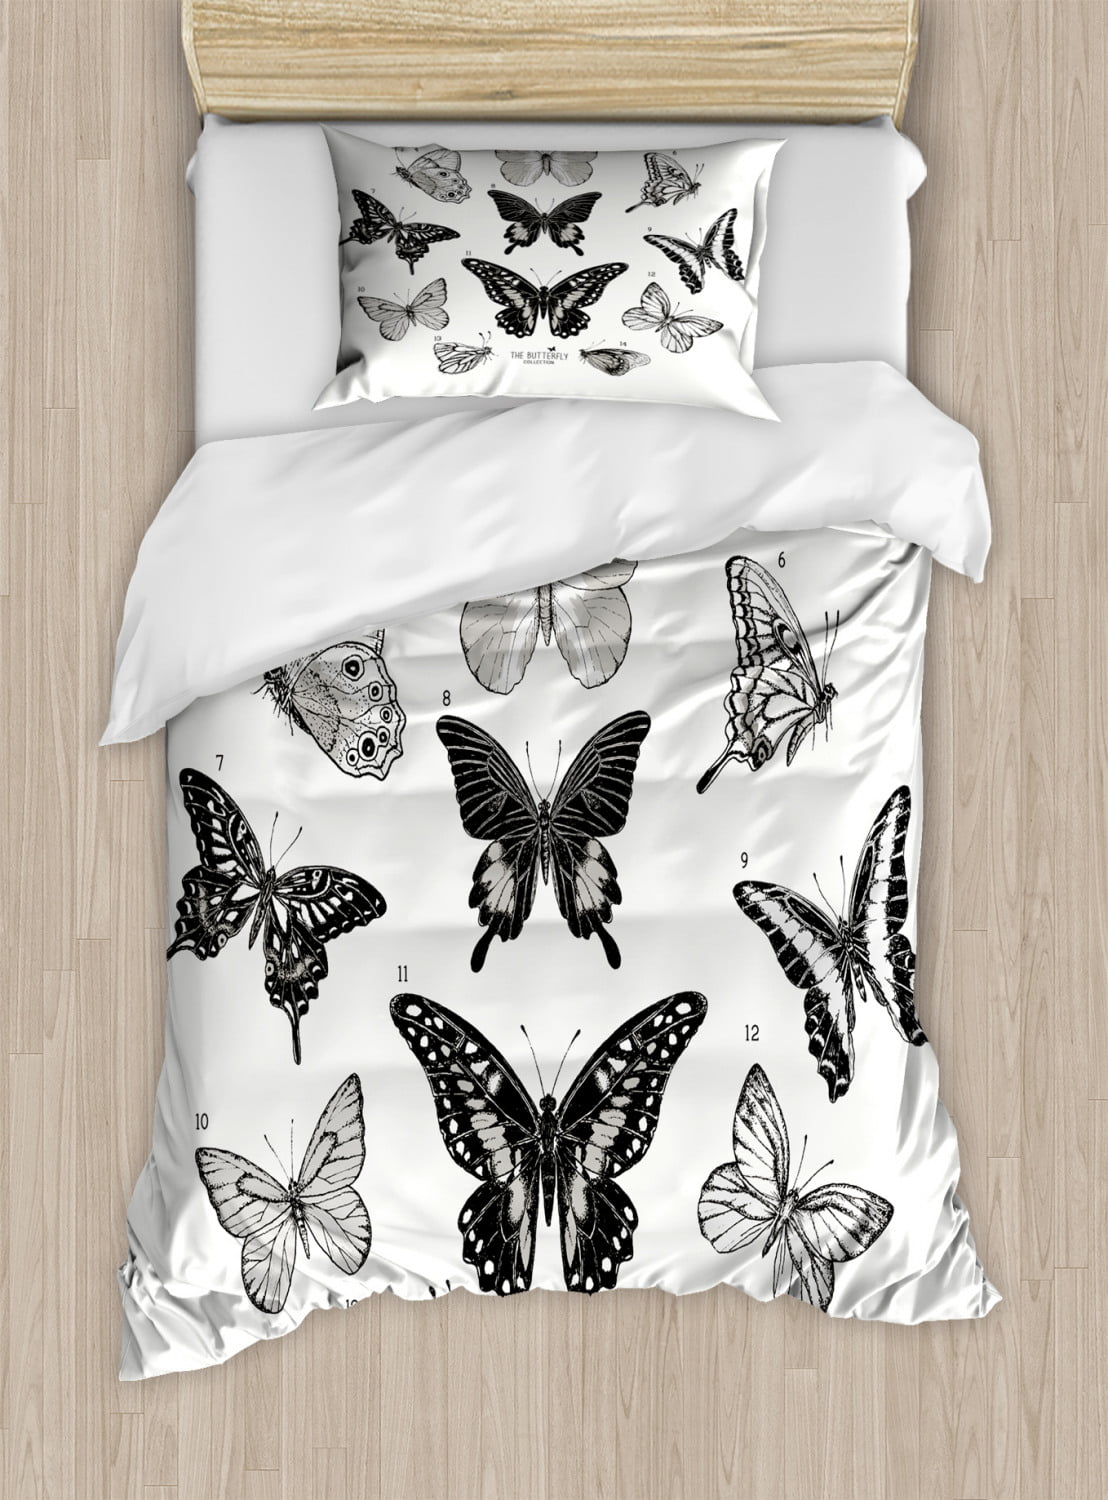 Butterfly Double King Bedding Duvet Set Kit Teal Blue Butterflies Soft Covers 